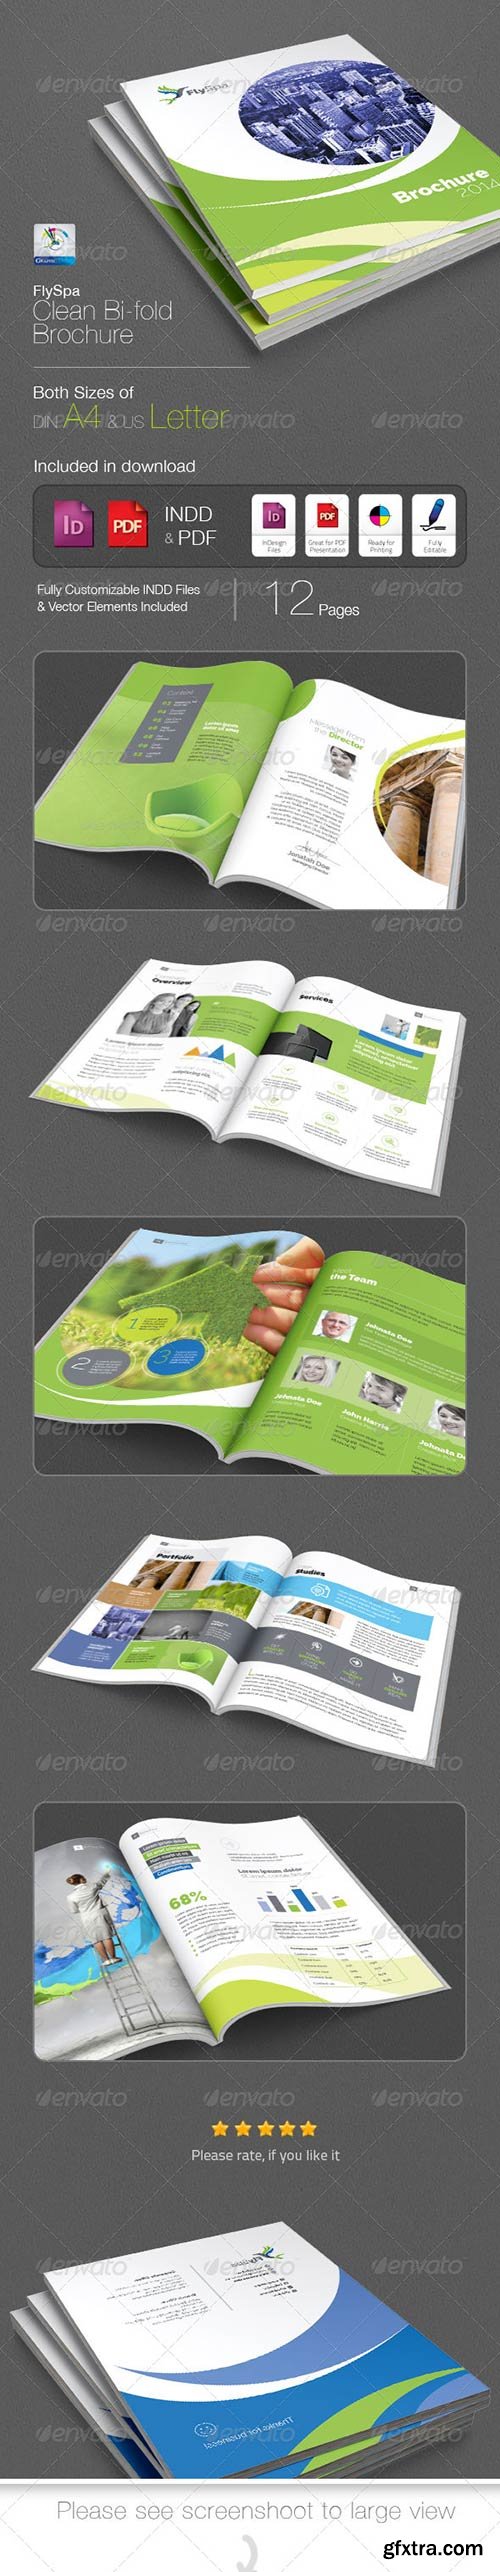 Graphicriver - FlySpa Bi-fold Brochure 5422114